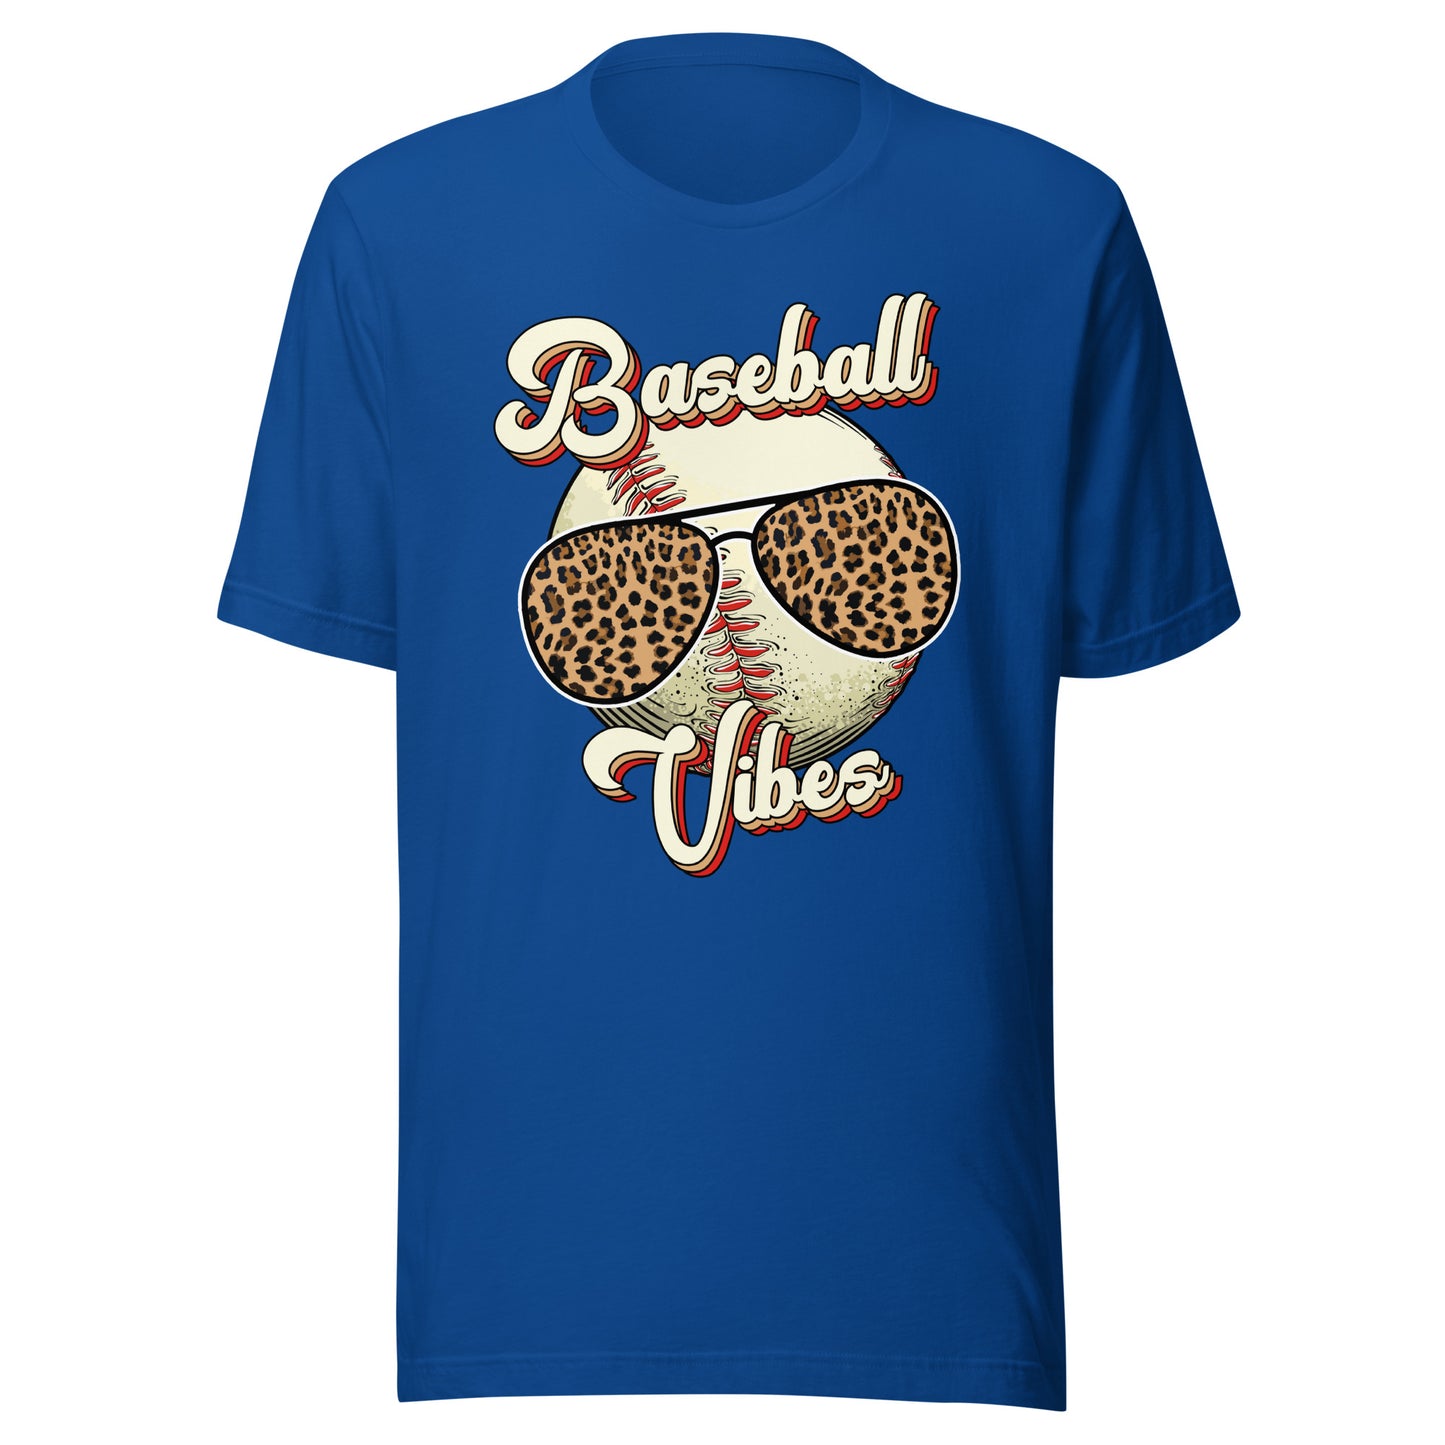 "Baseball Vibes" Unisex T-shirt